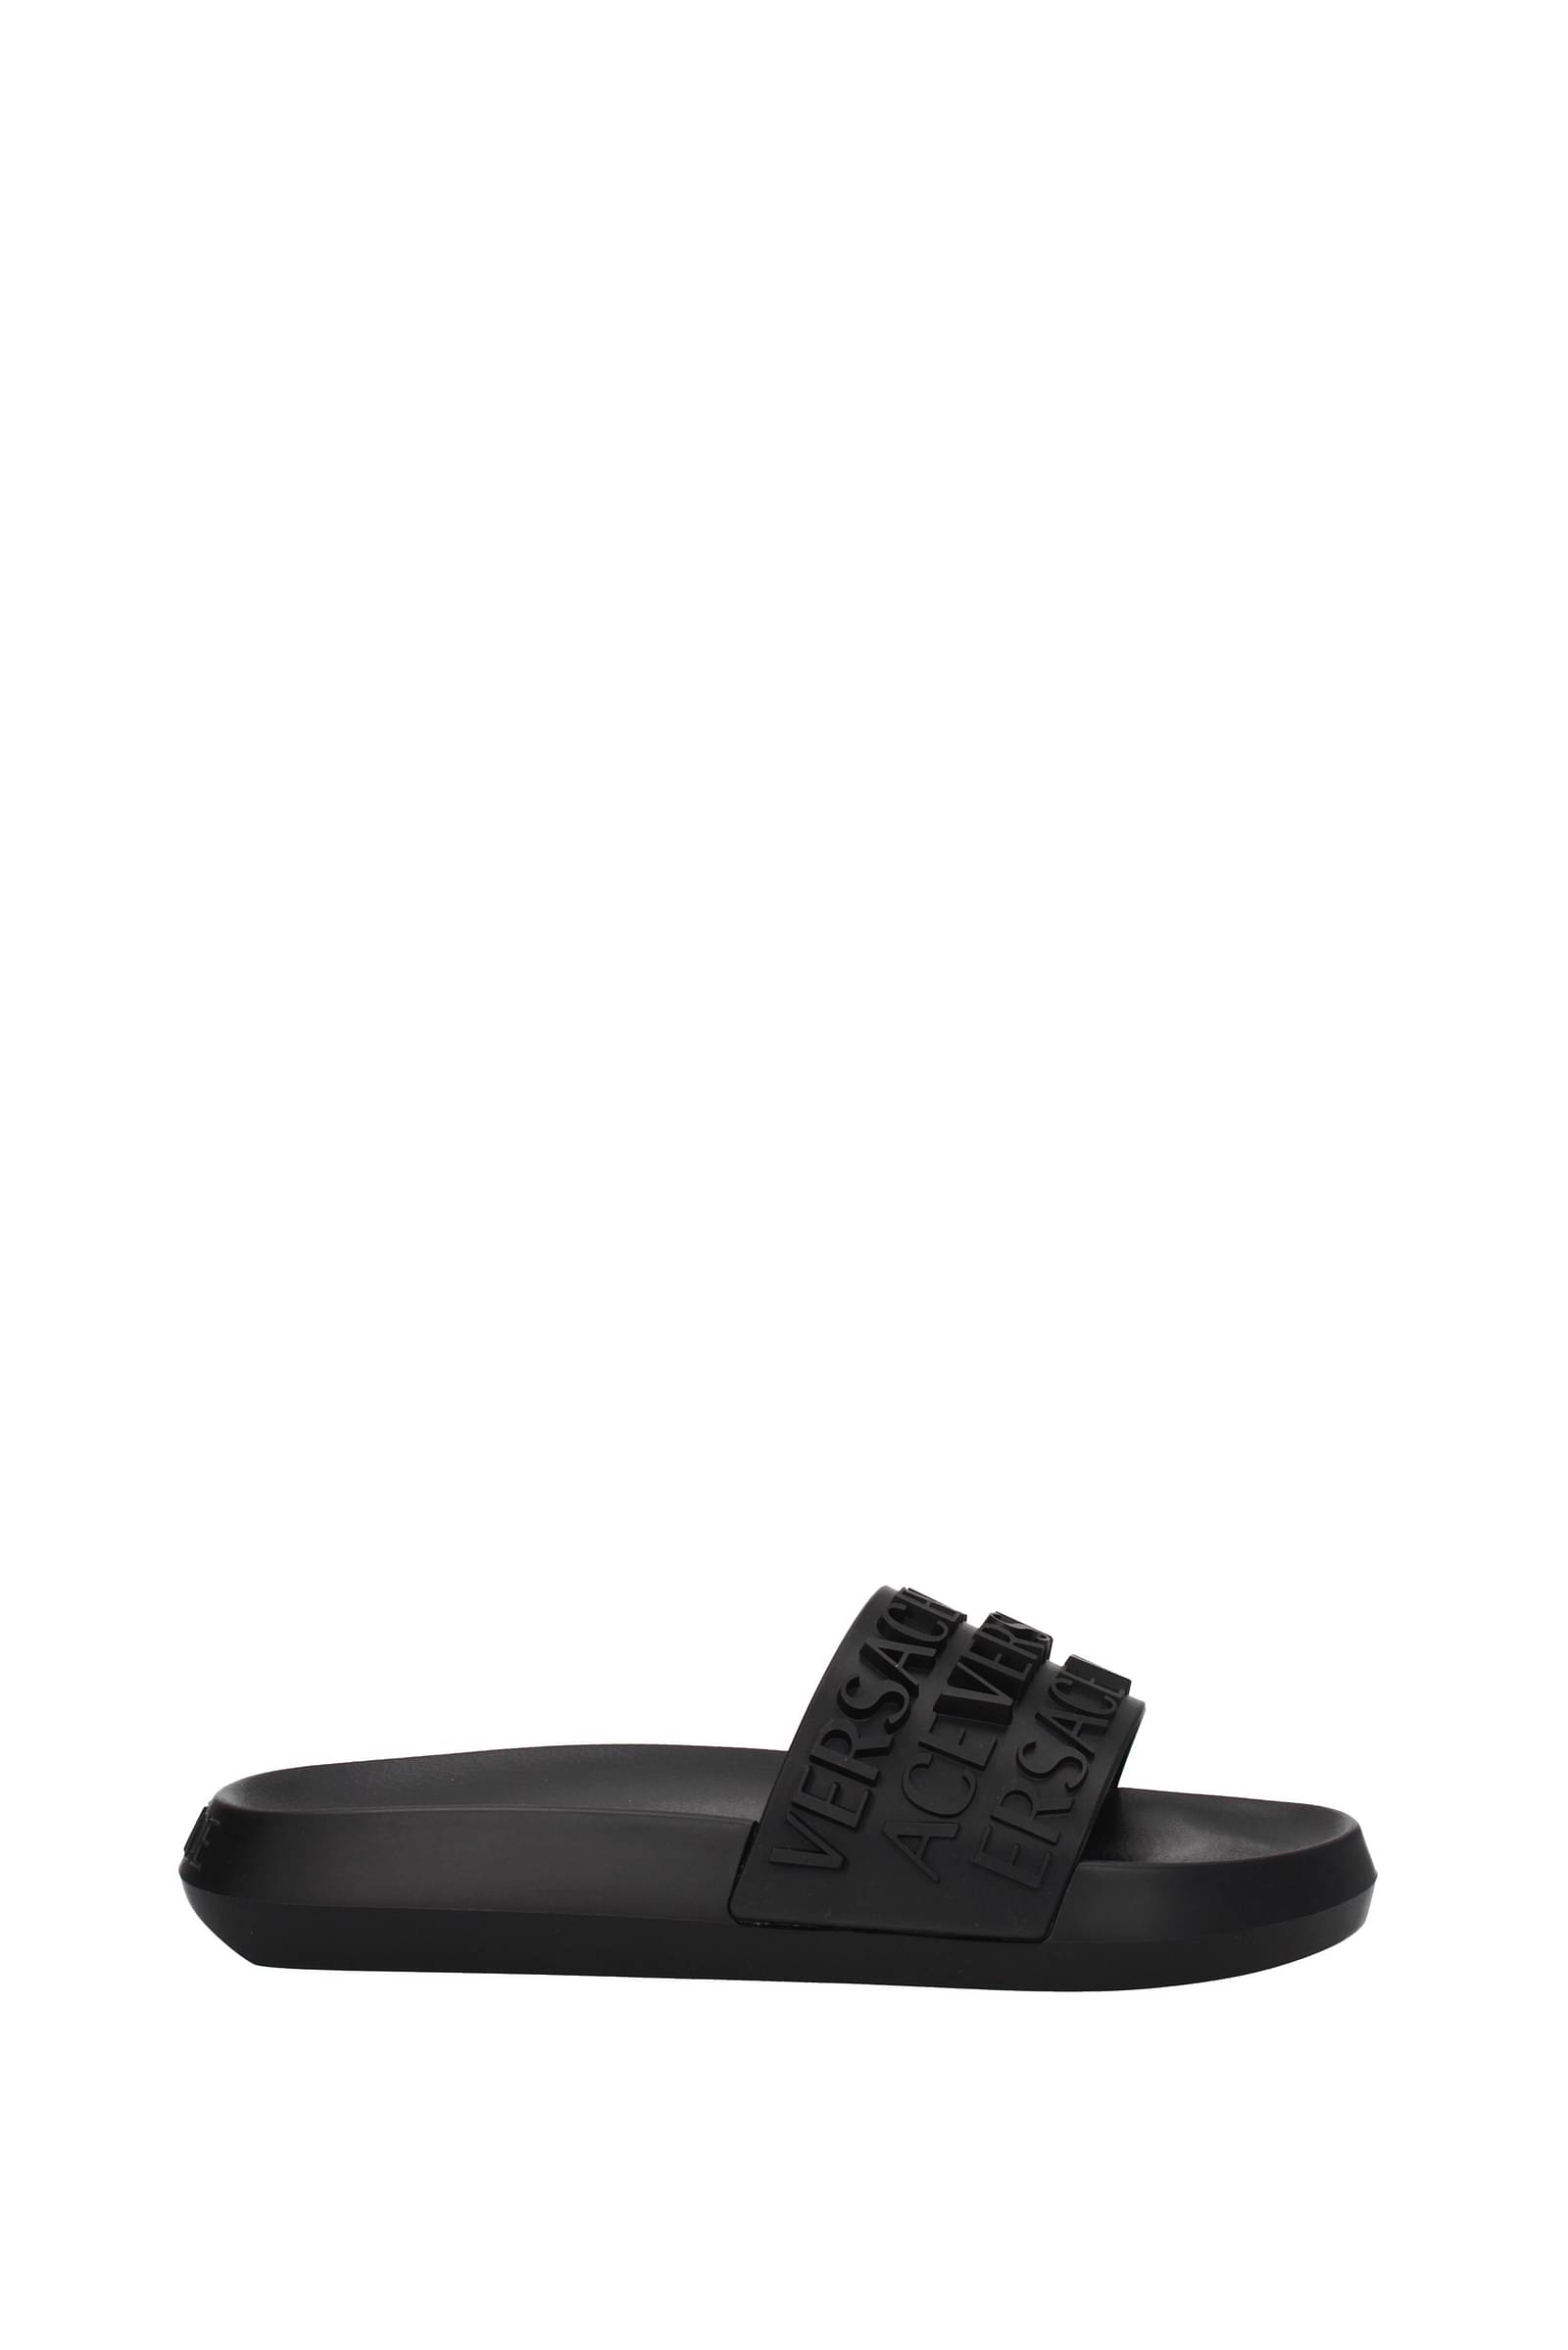 versace slippers | eBay